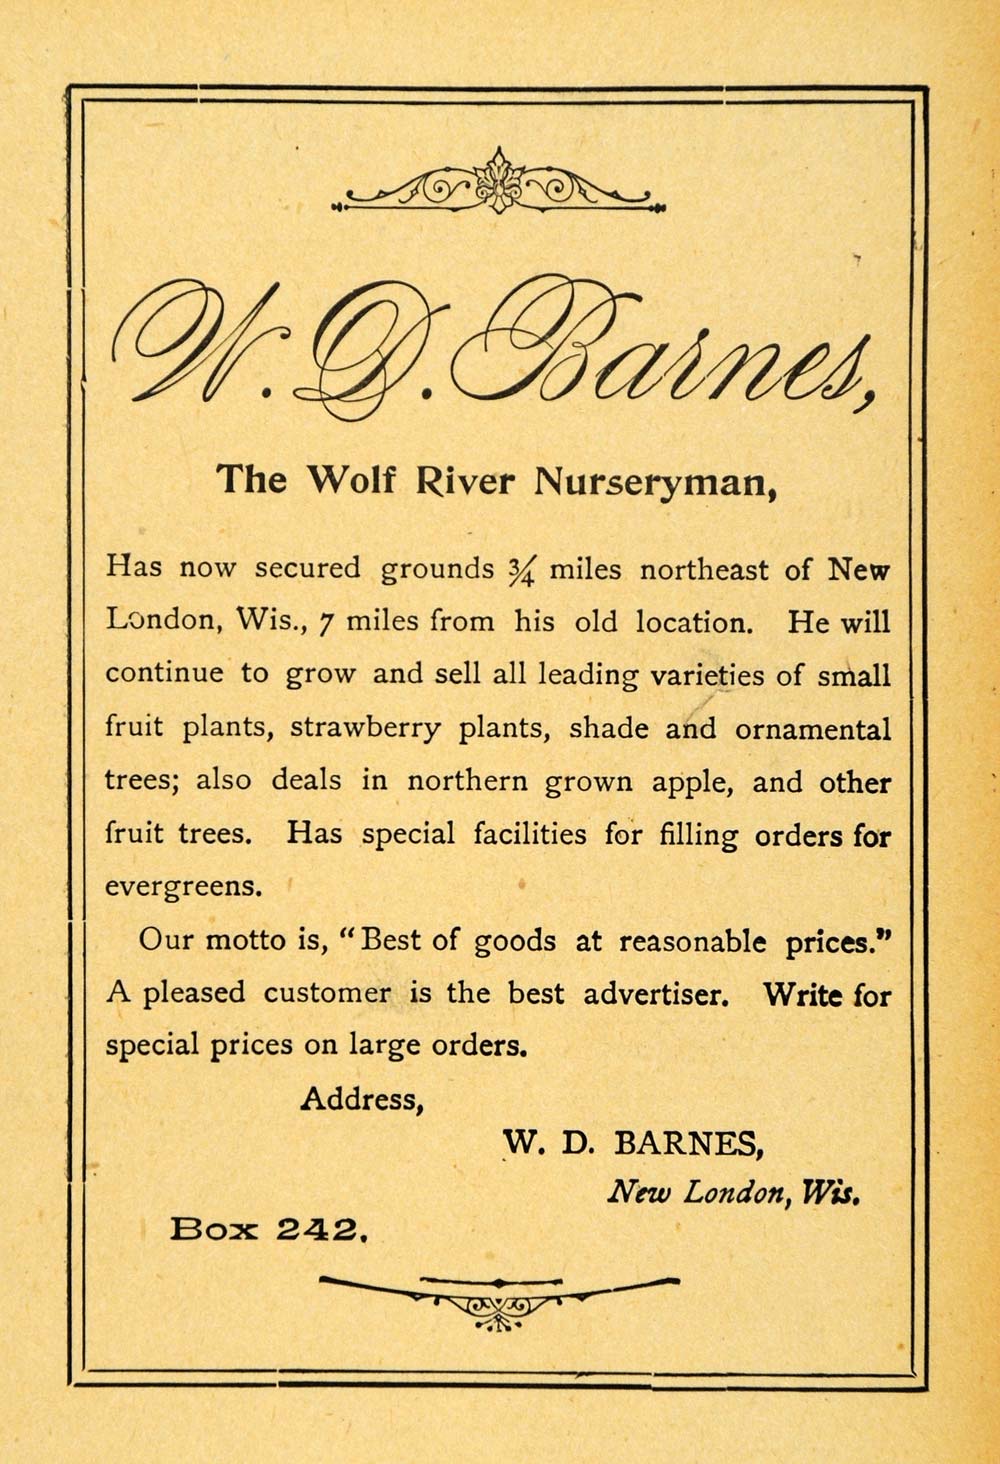 1893 Ad W. D. Barnes New London Wis. Wolf River Nursery - ORIGINAL WFI1